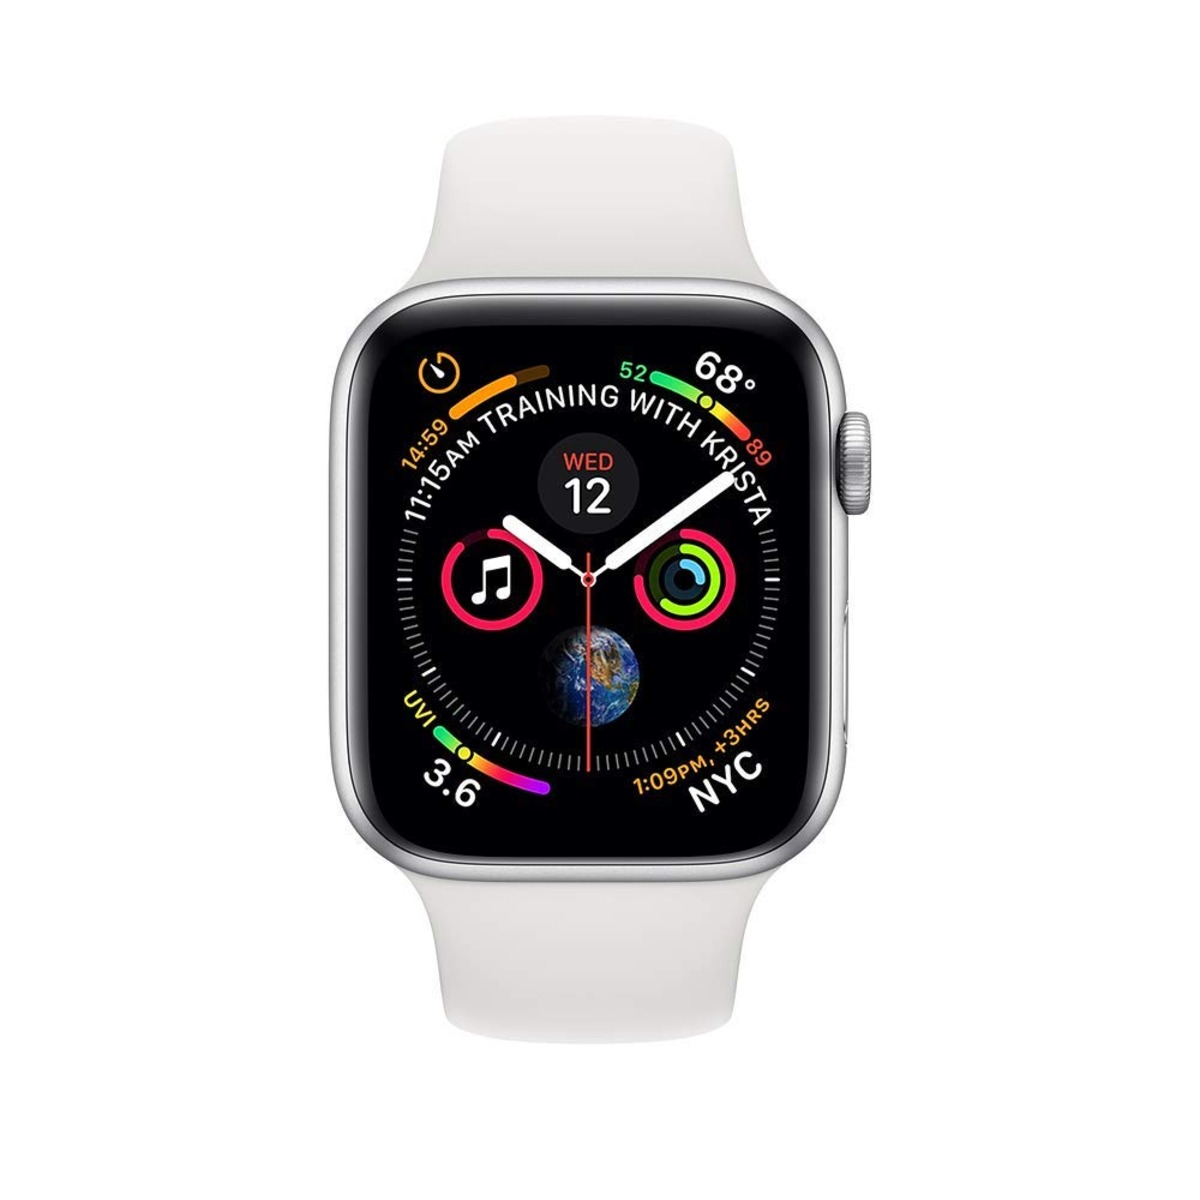 apple-watch-series-4-rumors-release-date-features